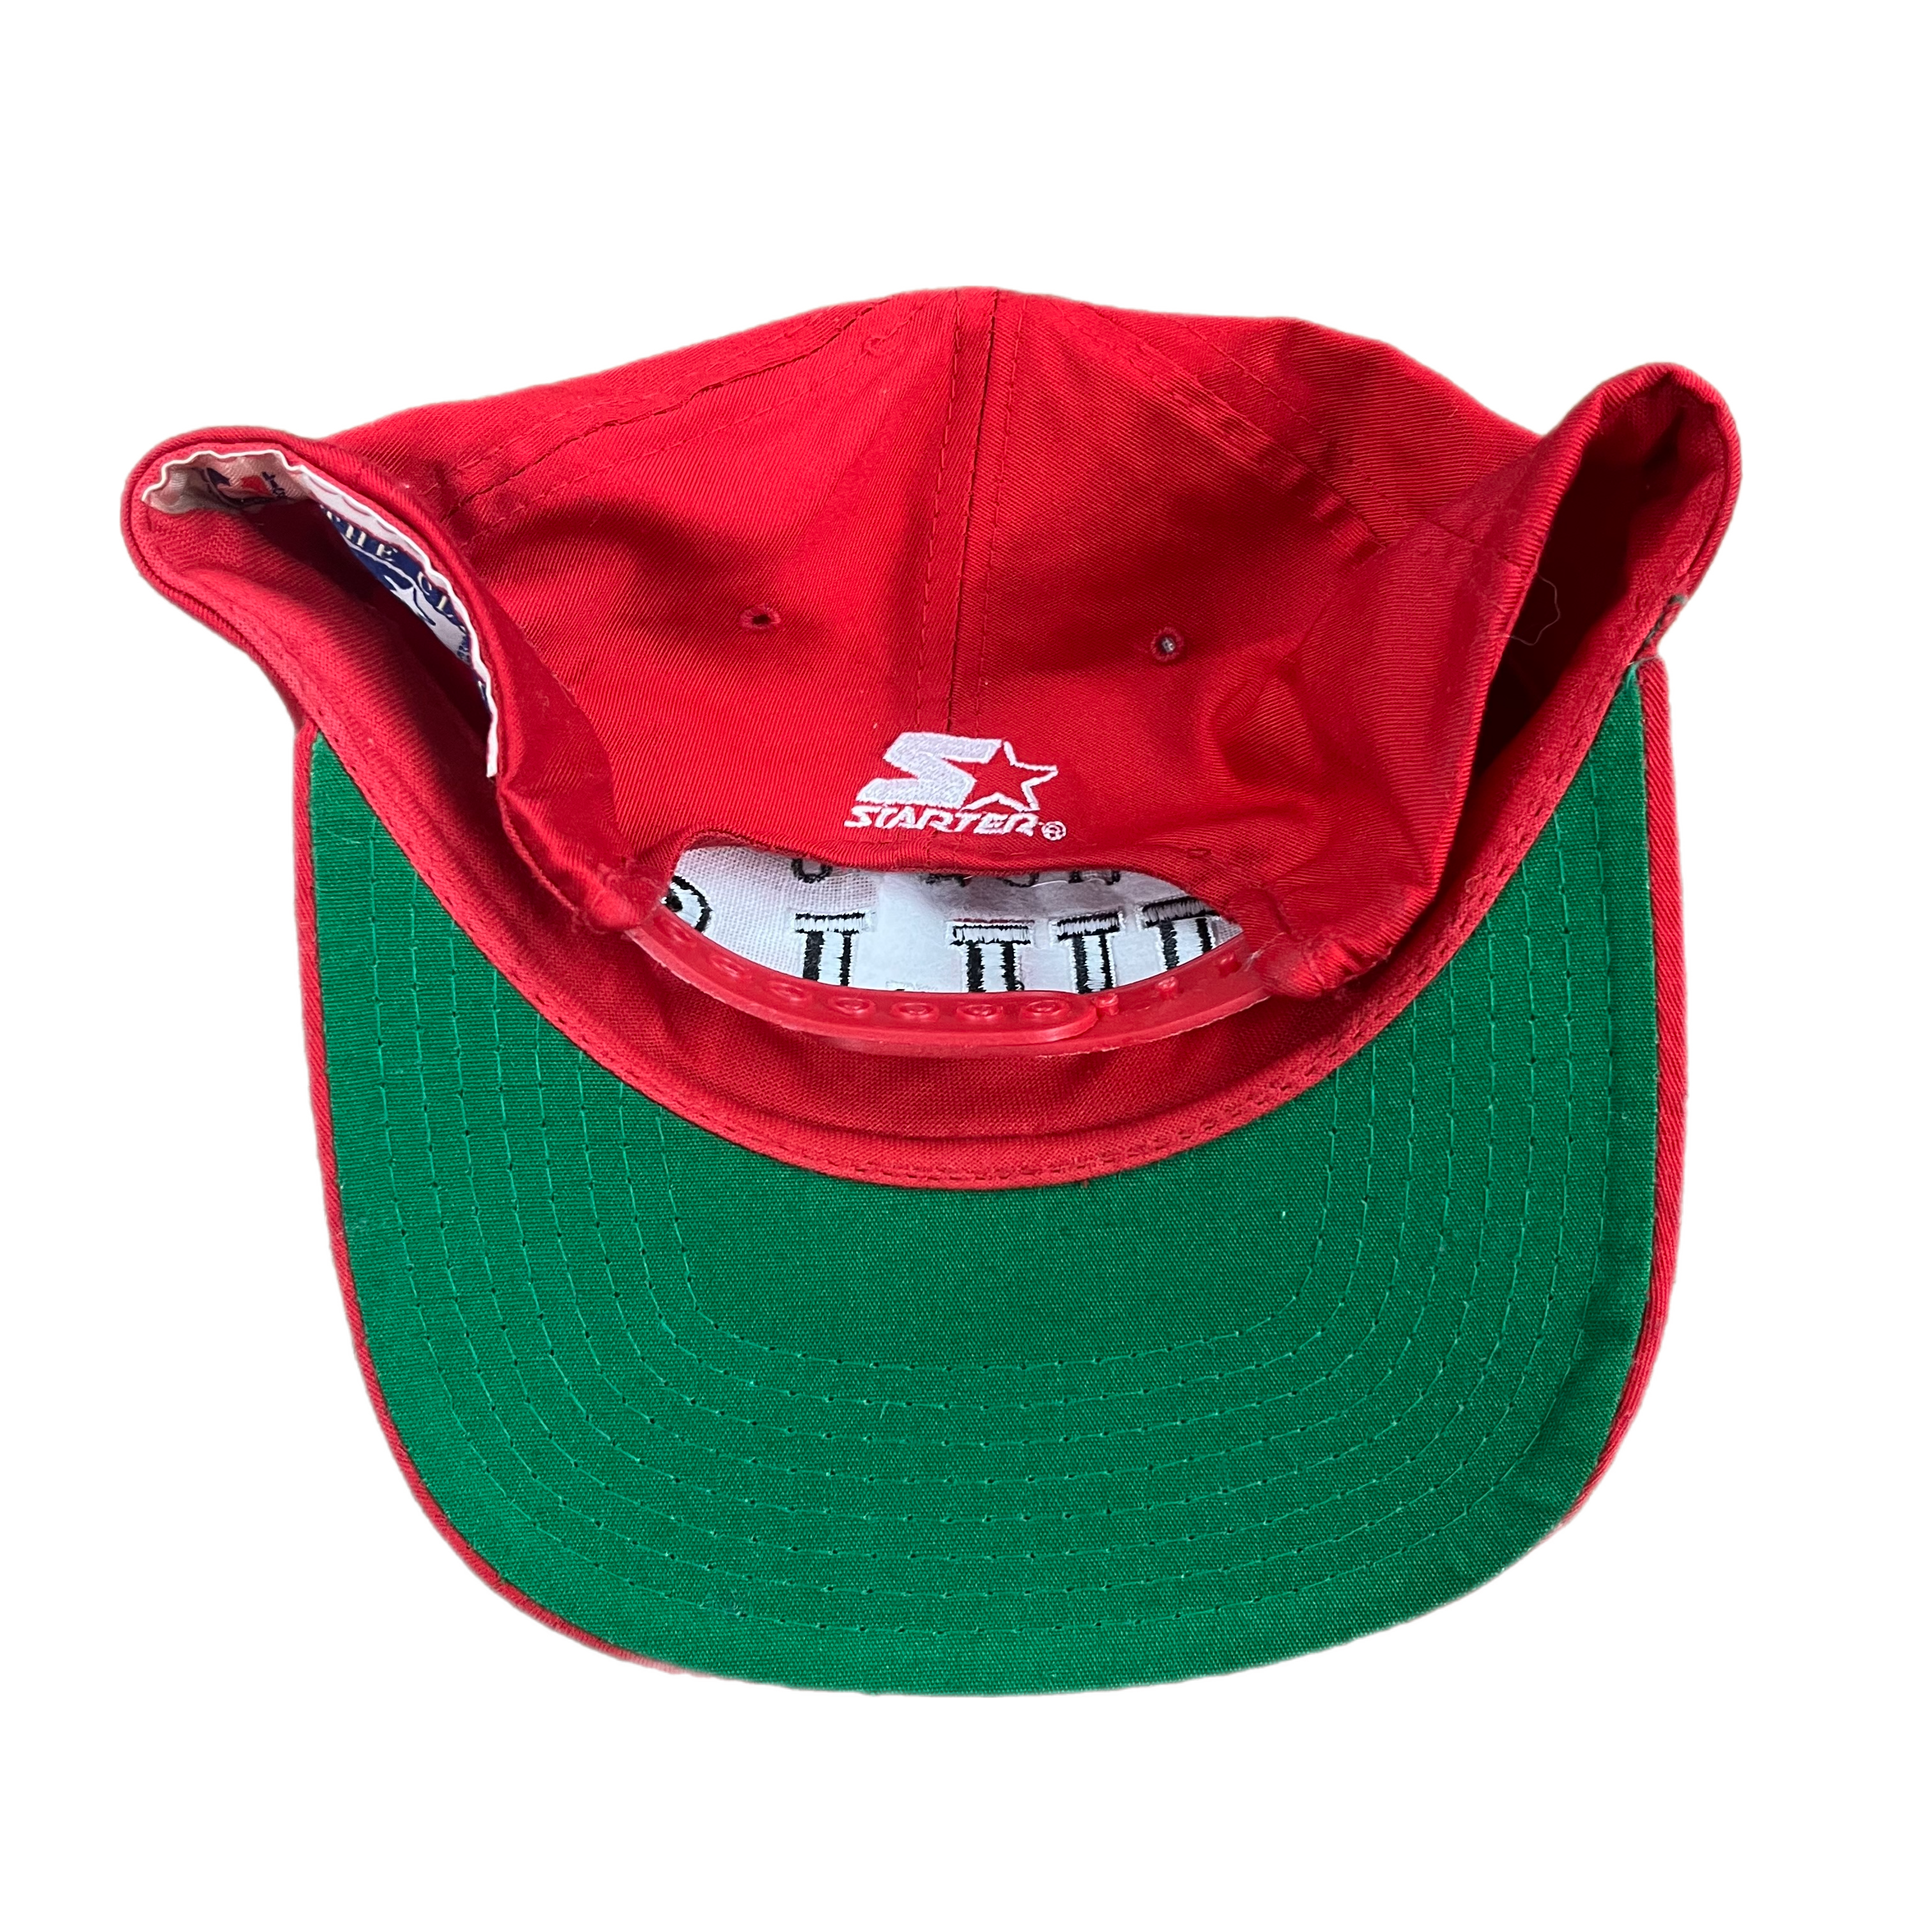 Vintage Starter Chicago Bulls NBA Cap Hat